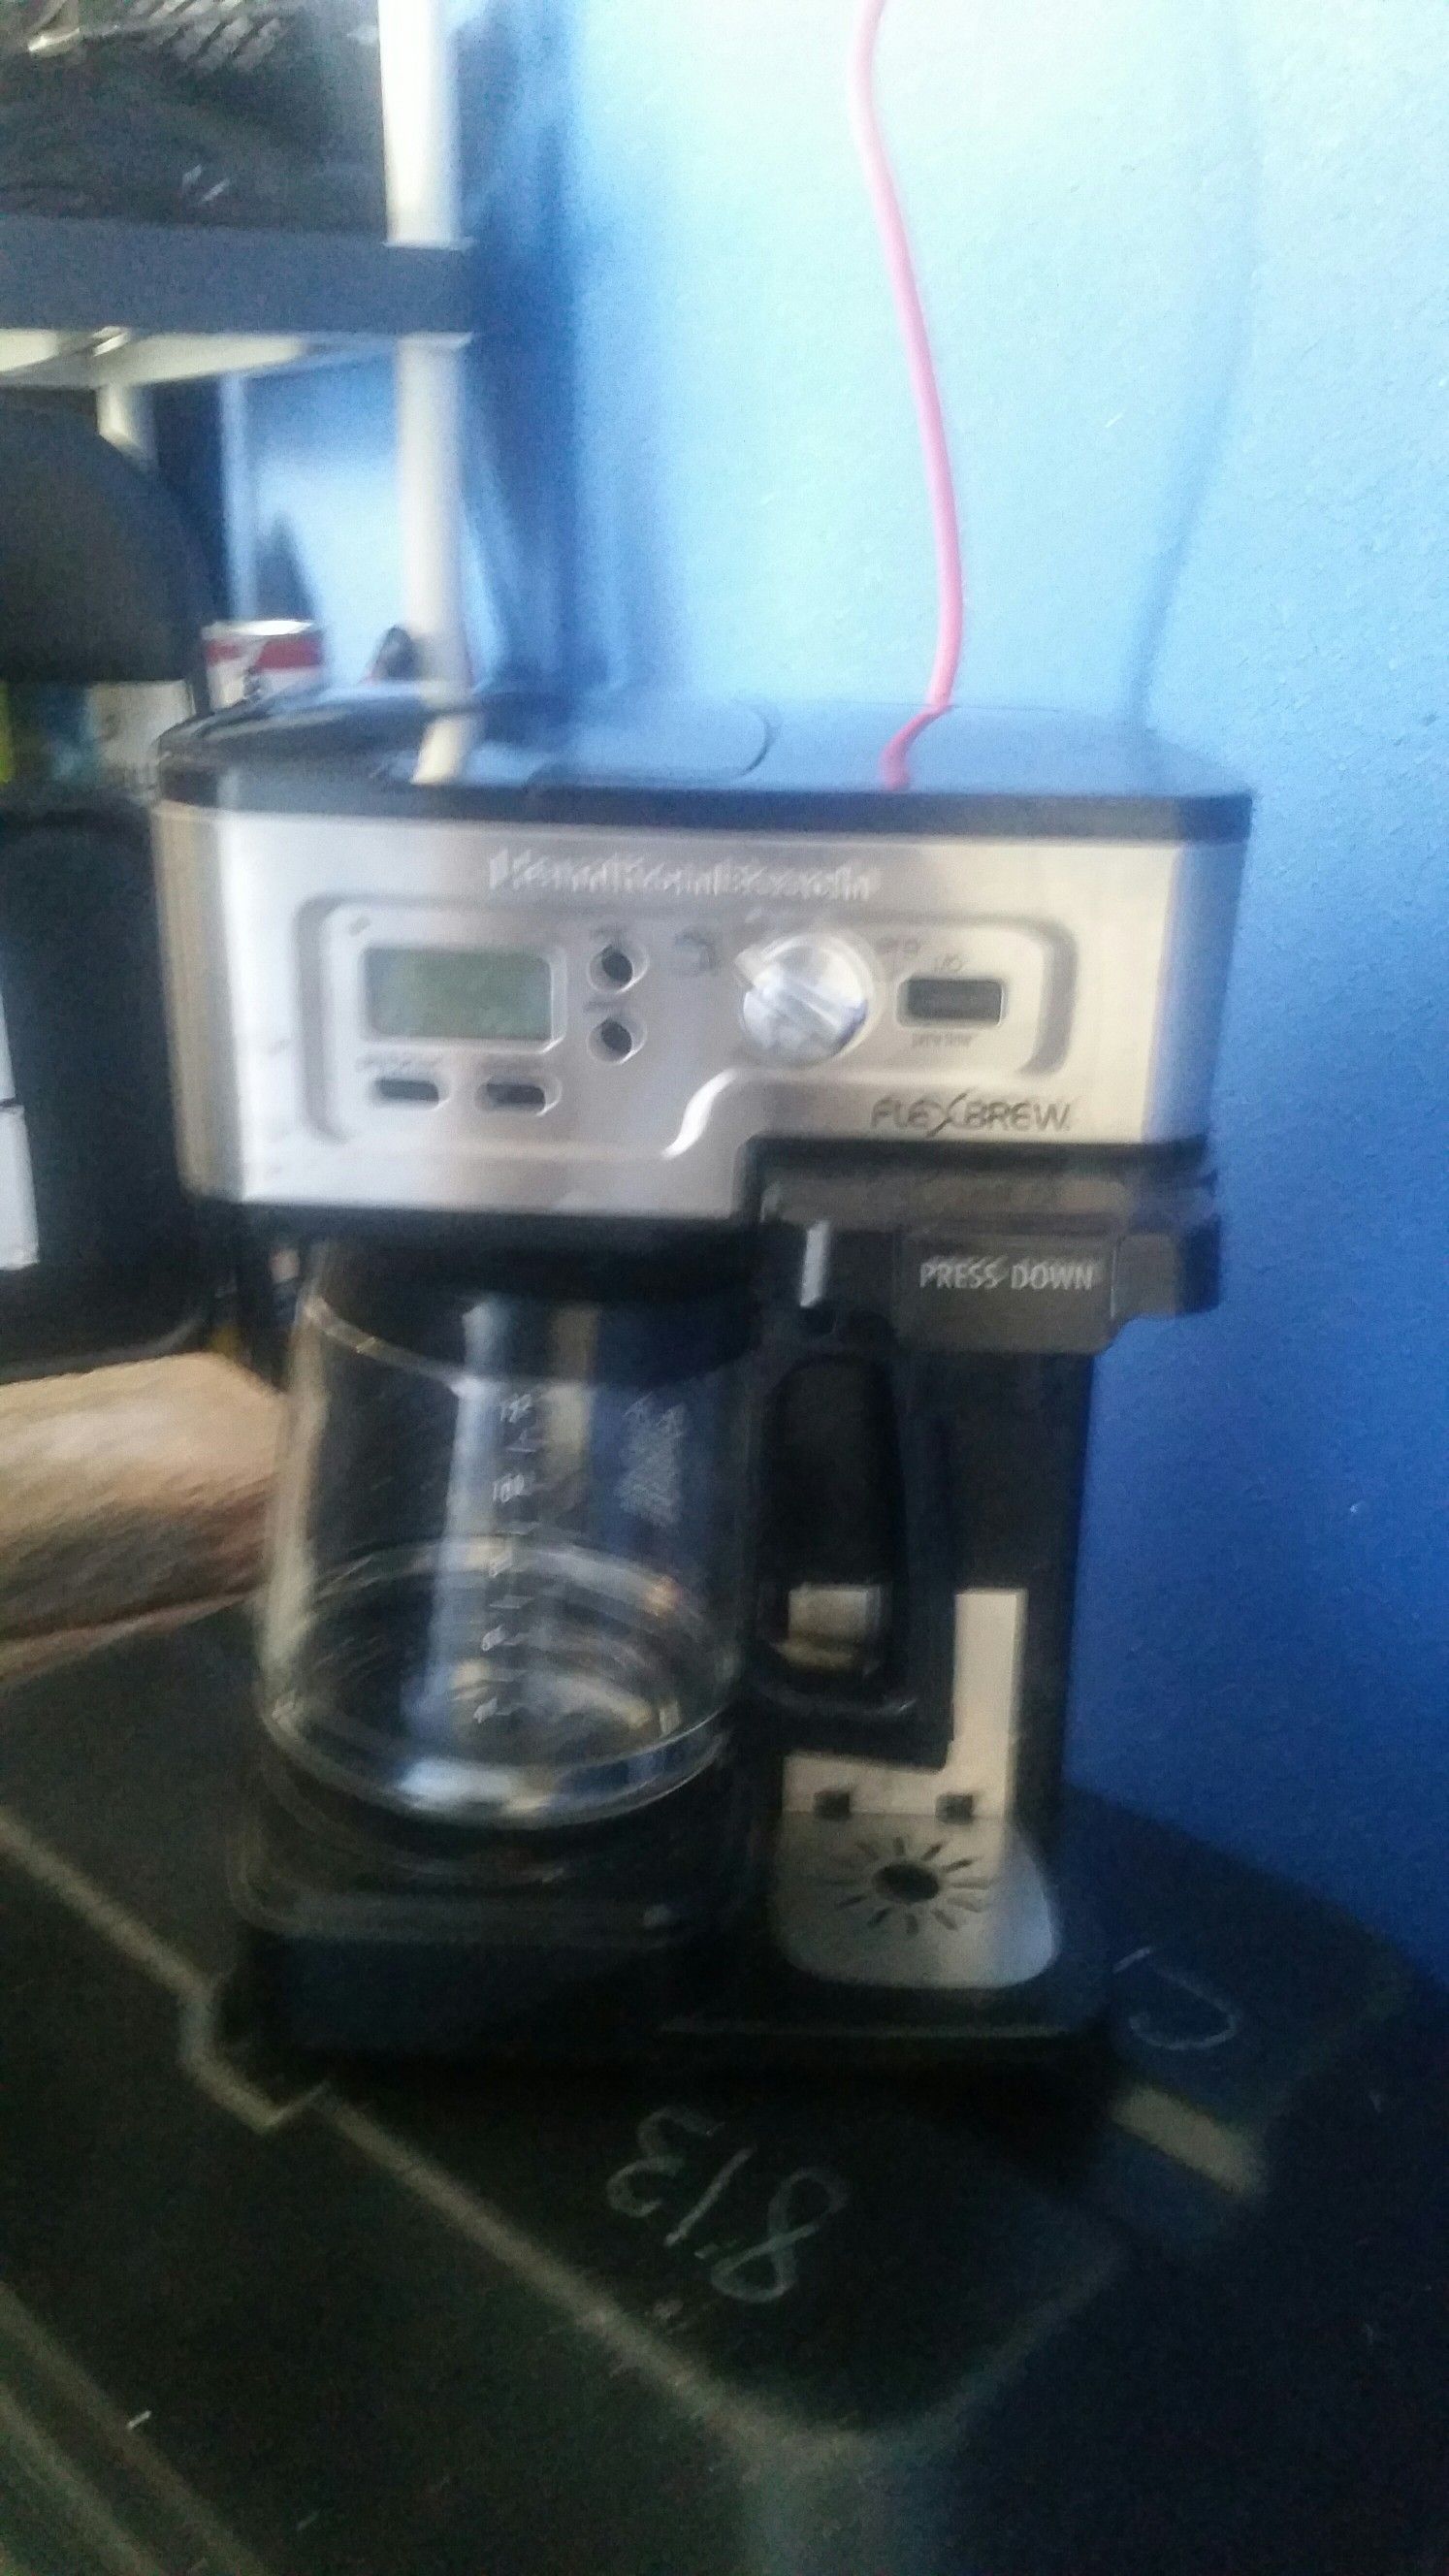 Fairly new coffee maker